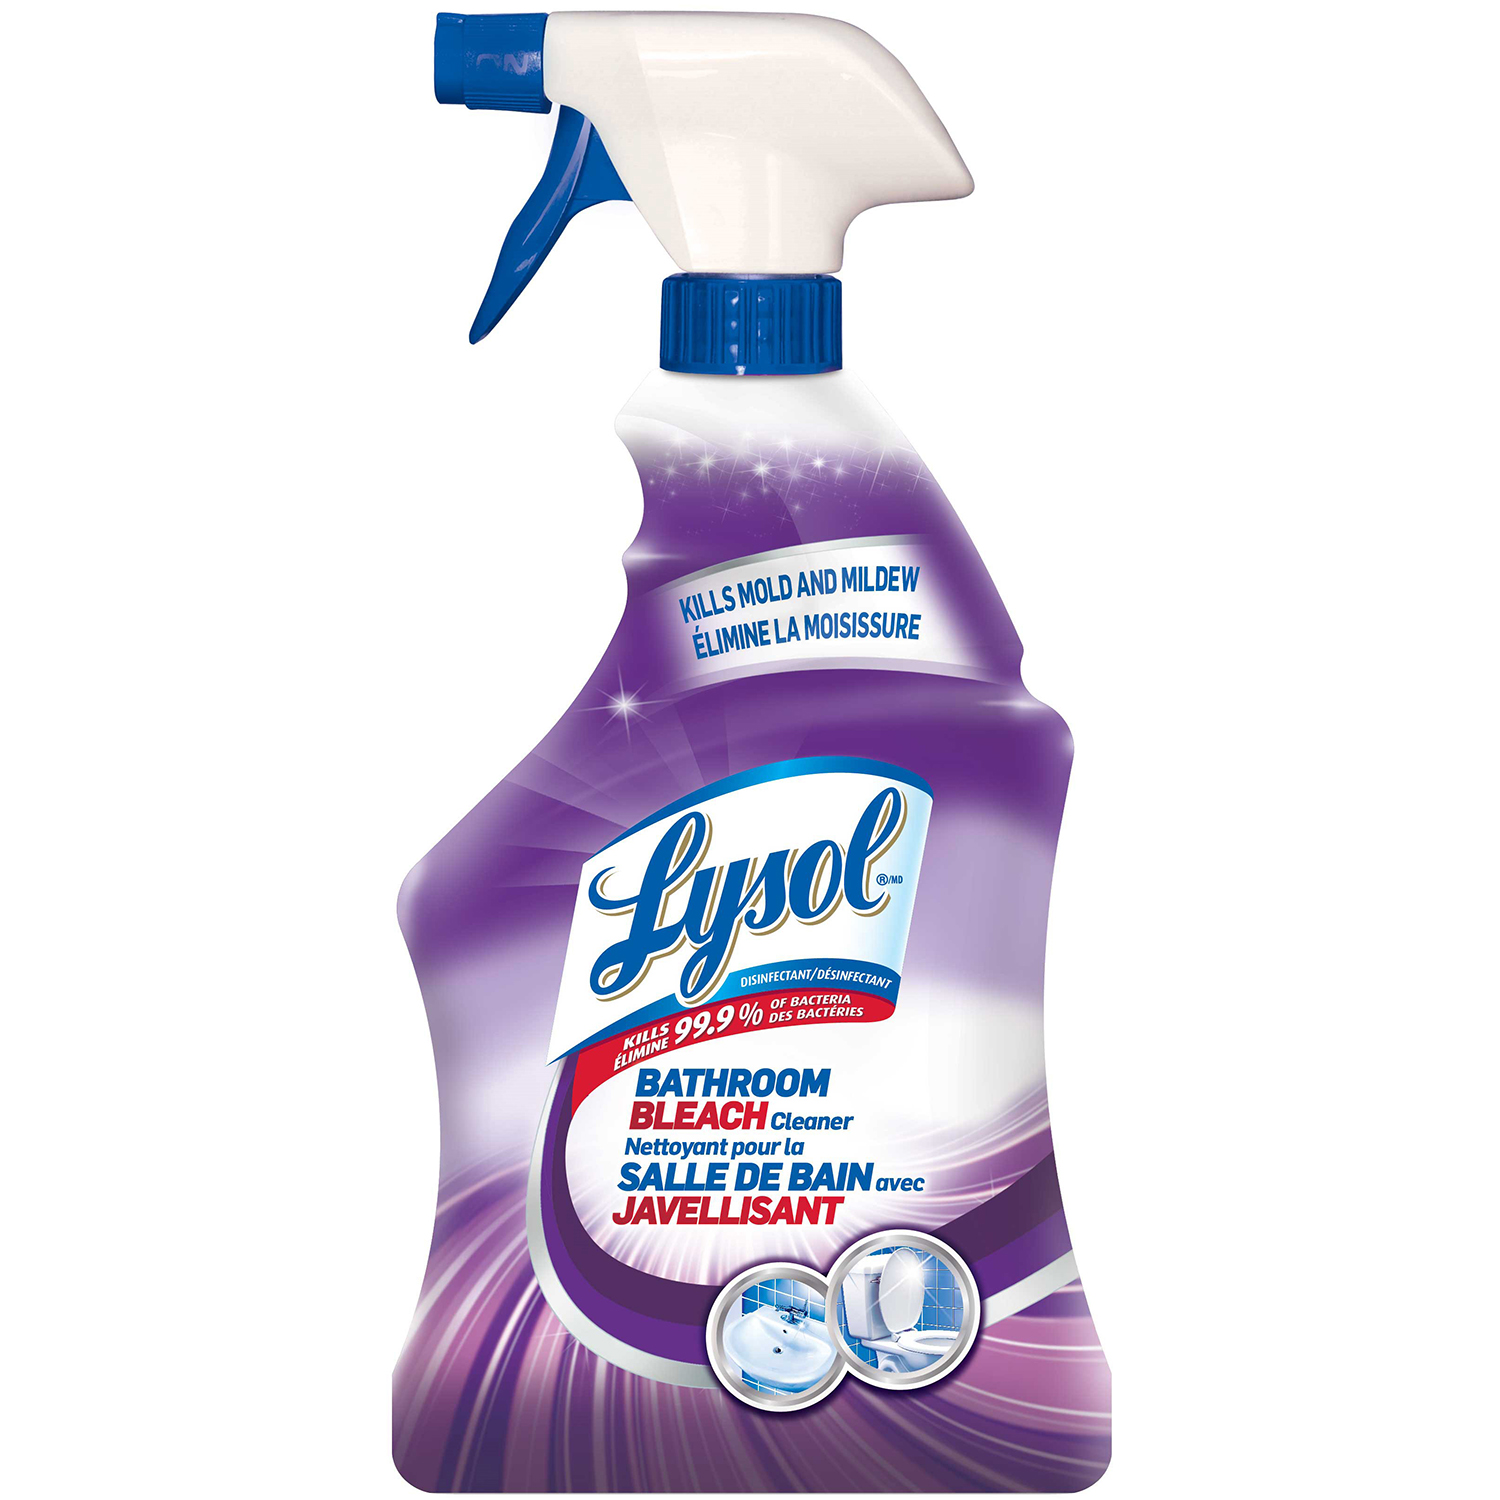 Lysol Mold And Mildew Bathroom Bleach Cleaner, 950 mL